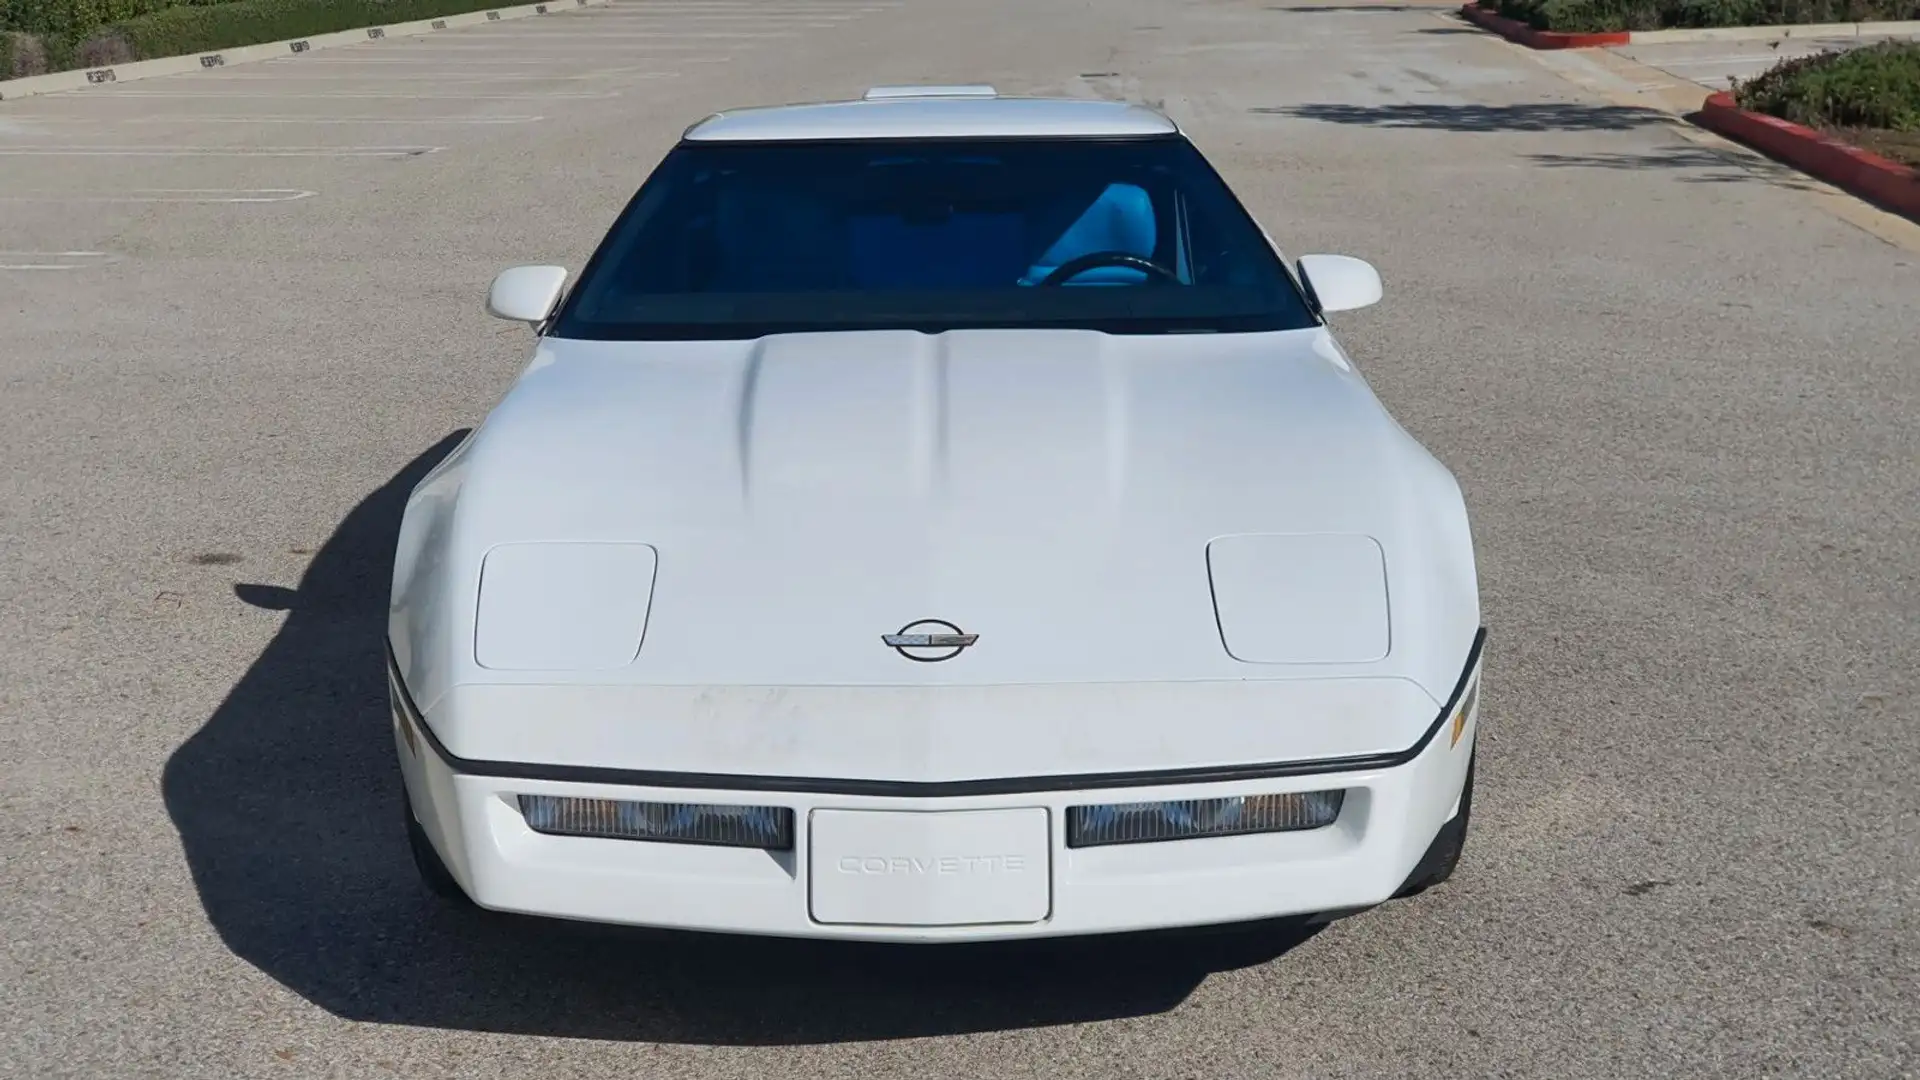 Corvette C4 Automatik California 74tsd mls Historie Beyaz - 2